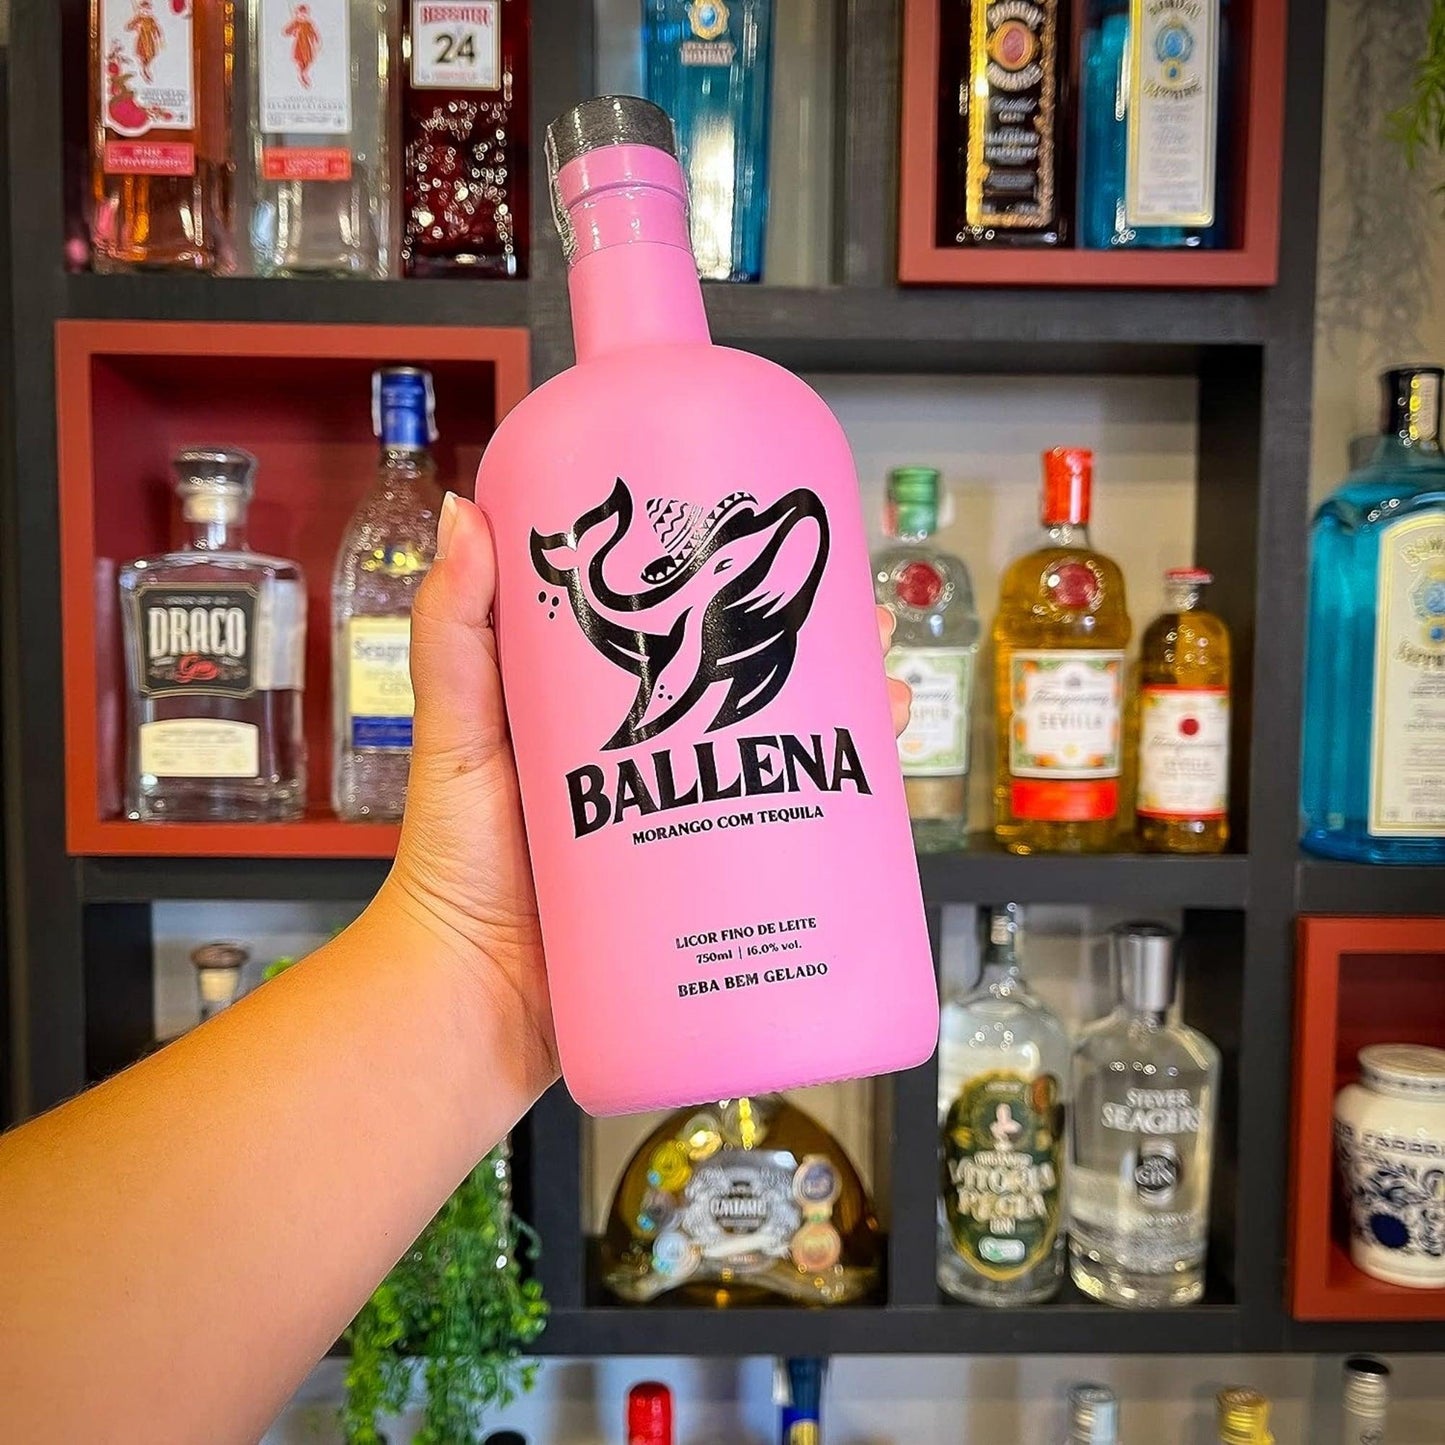 Ballena Strawberry Cream Liqueur with Tequila 750ml - Brazilian Shop